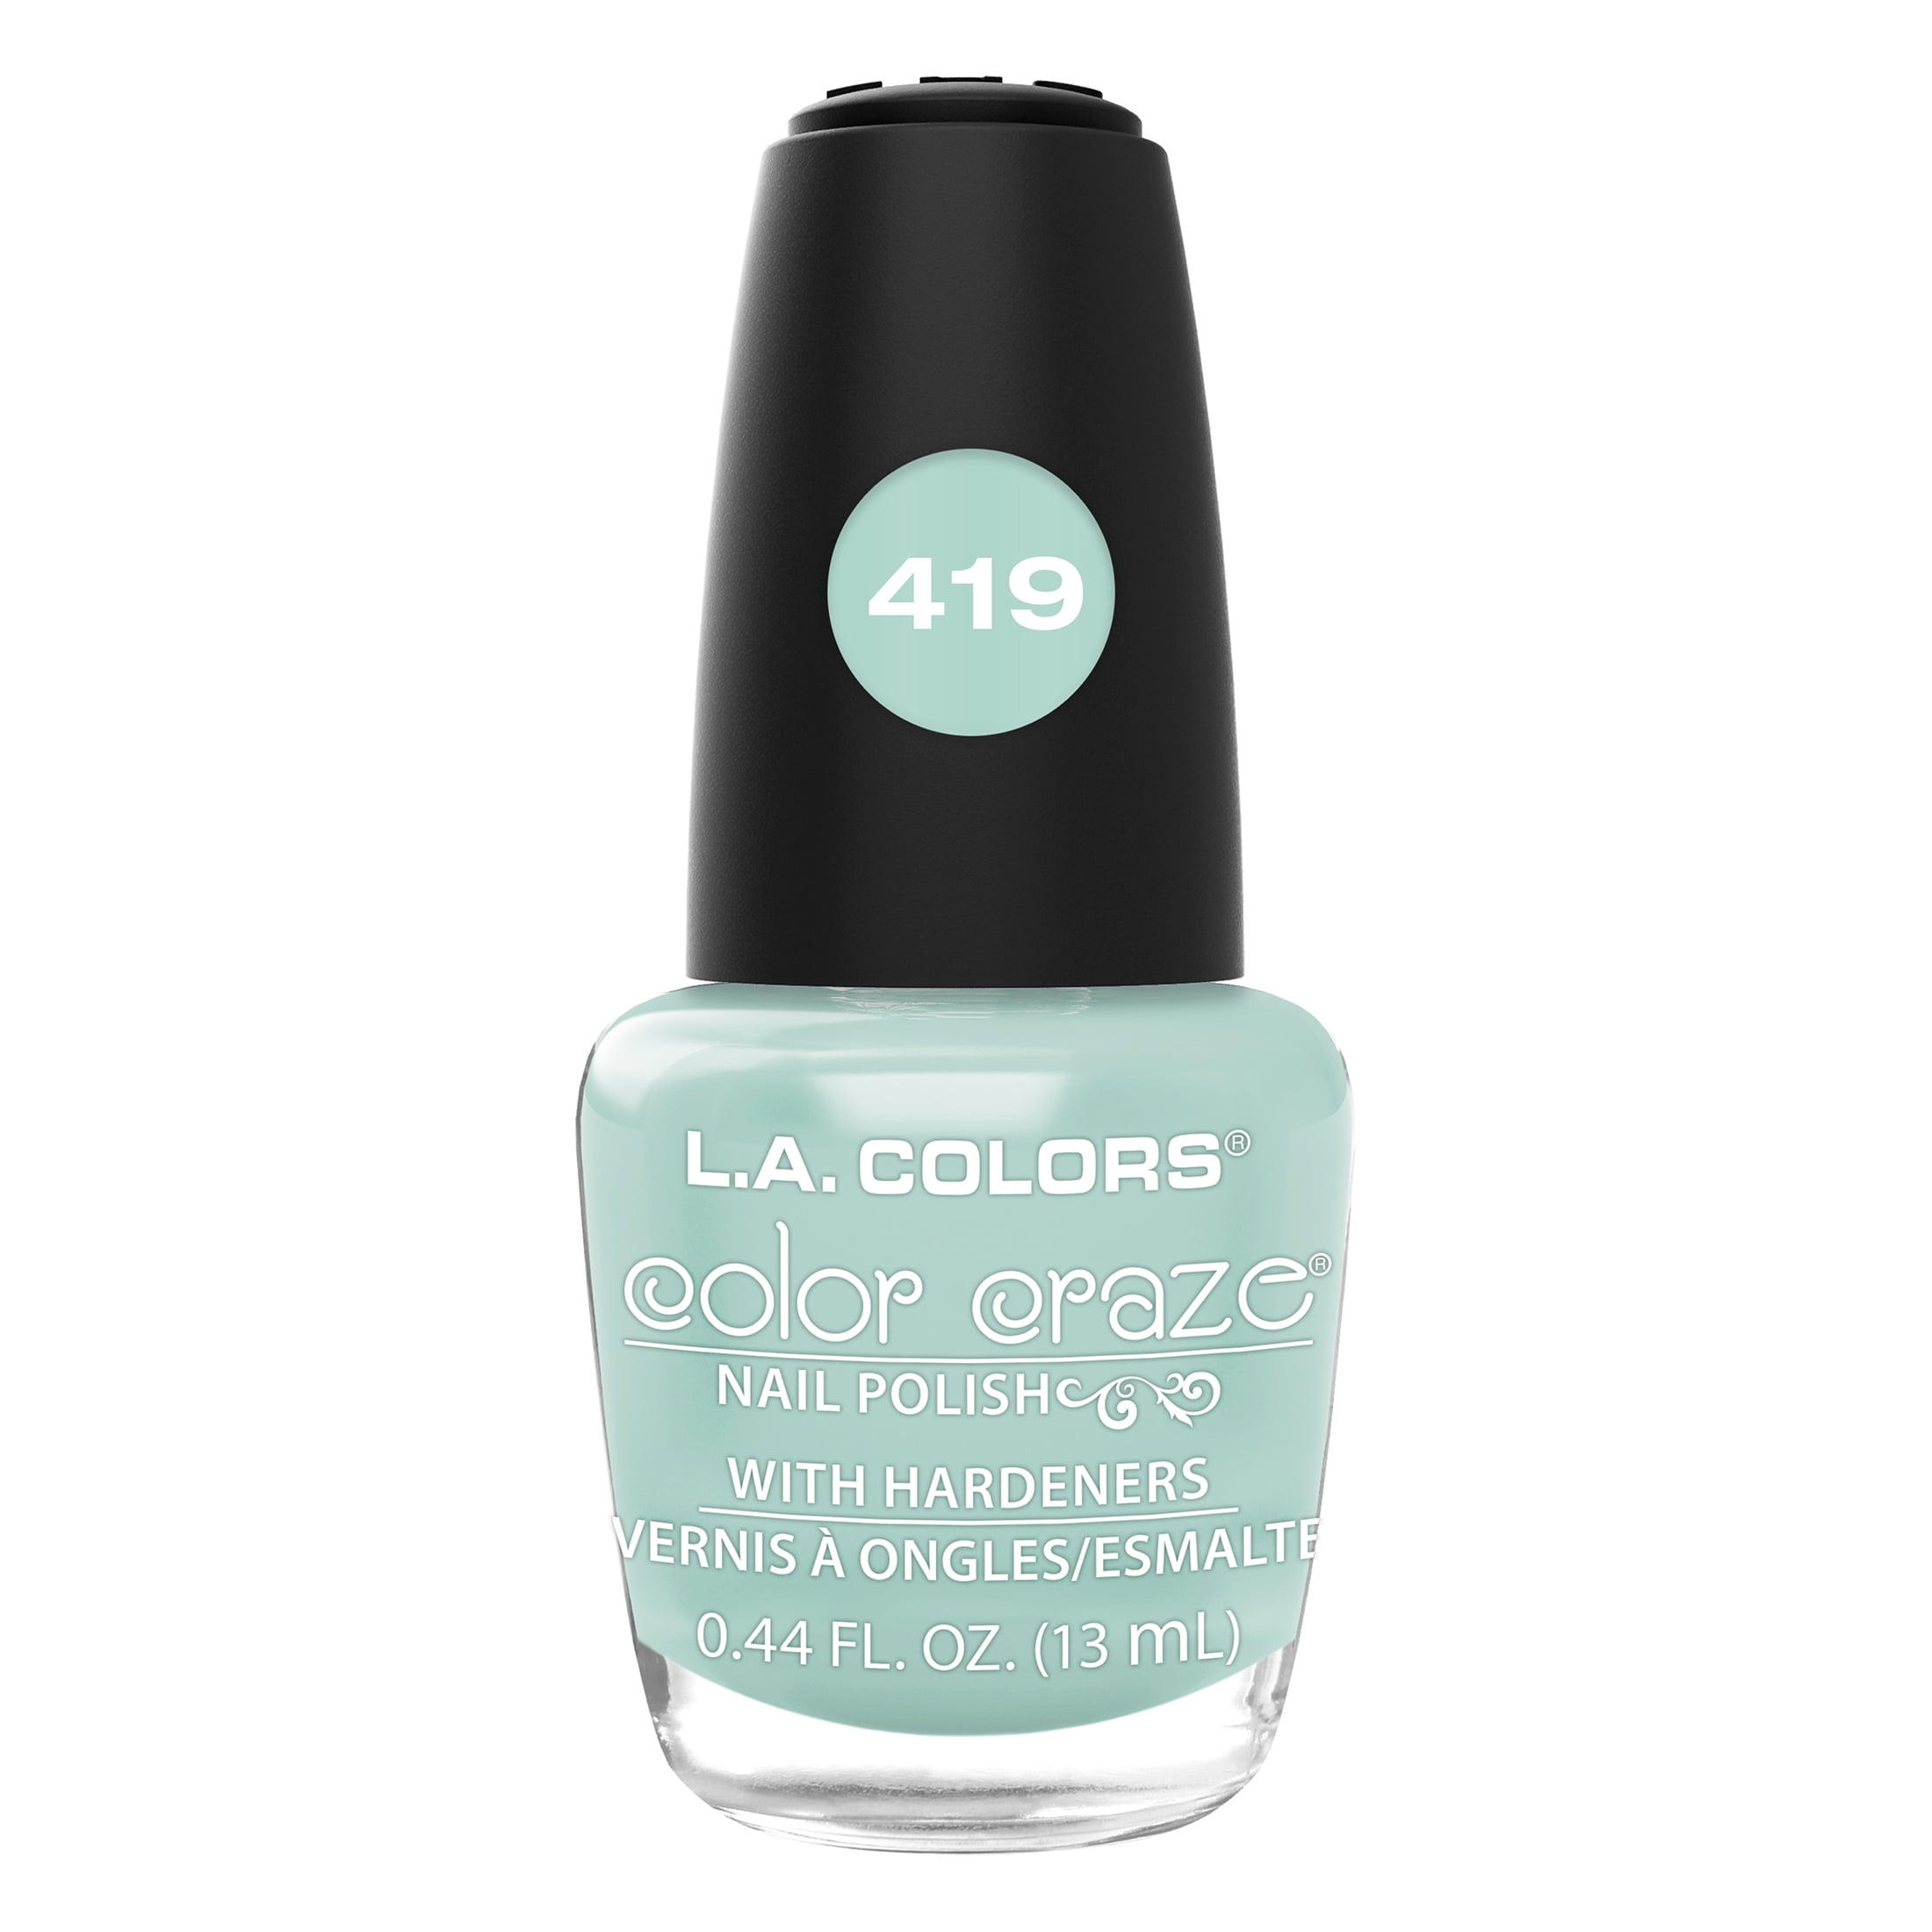 L.A. COLORS Color Craze Nail Polish, Pixie, 0.44 fl oz